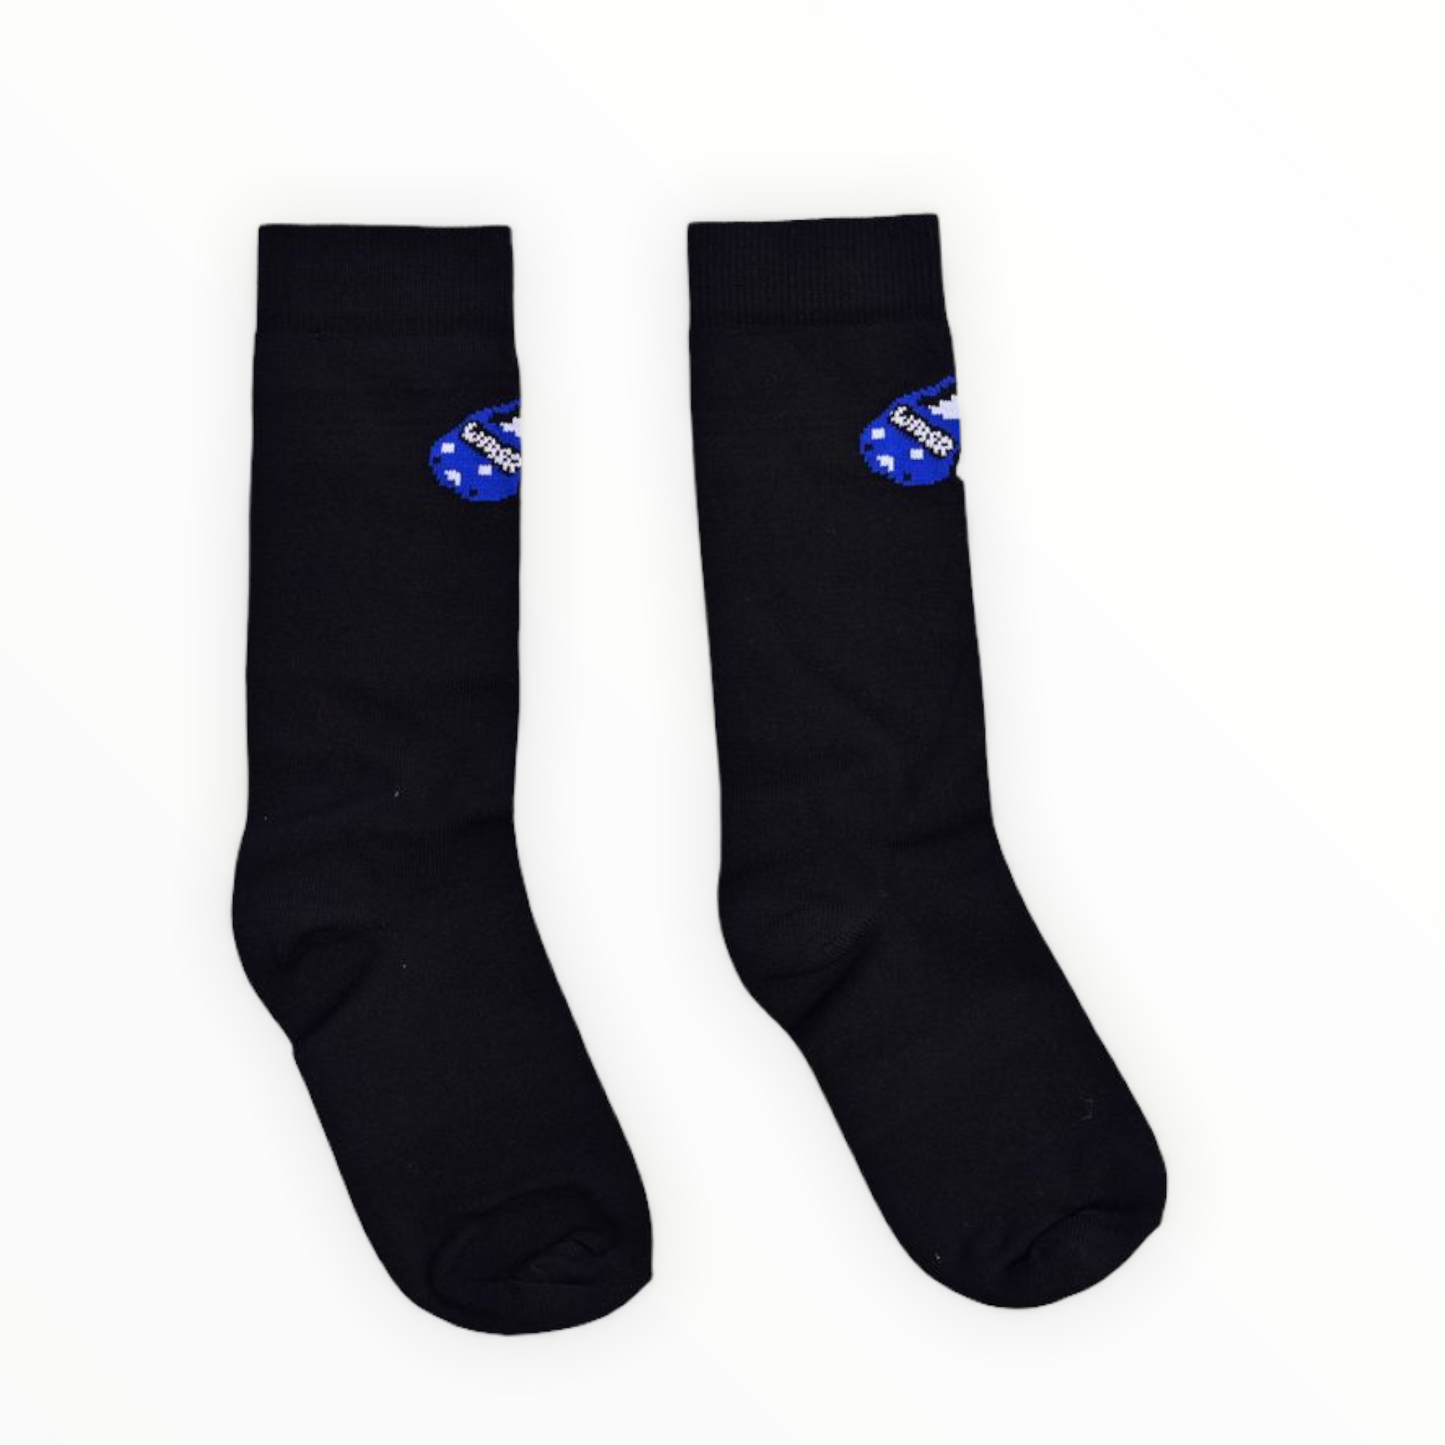 Winners Car Logo Socks - Black/Blue